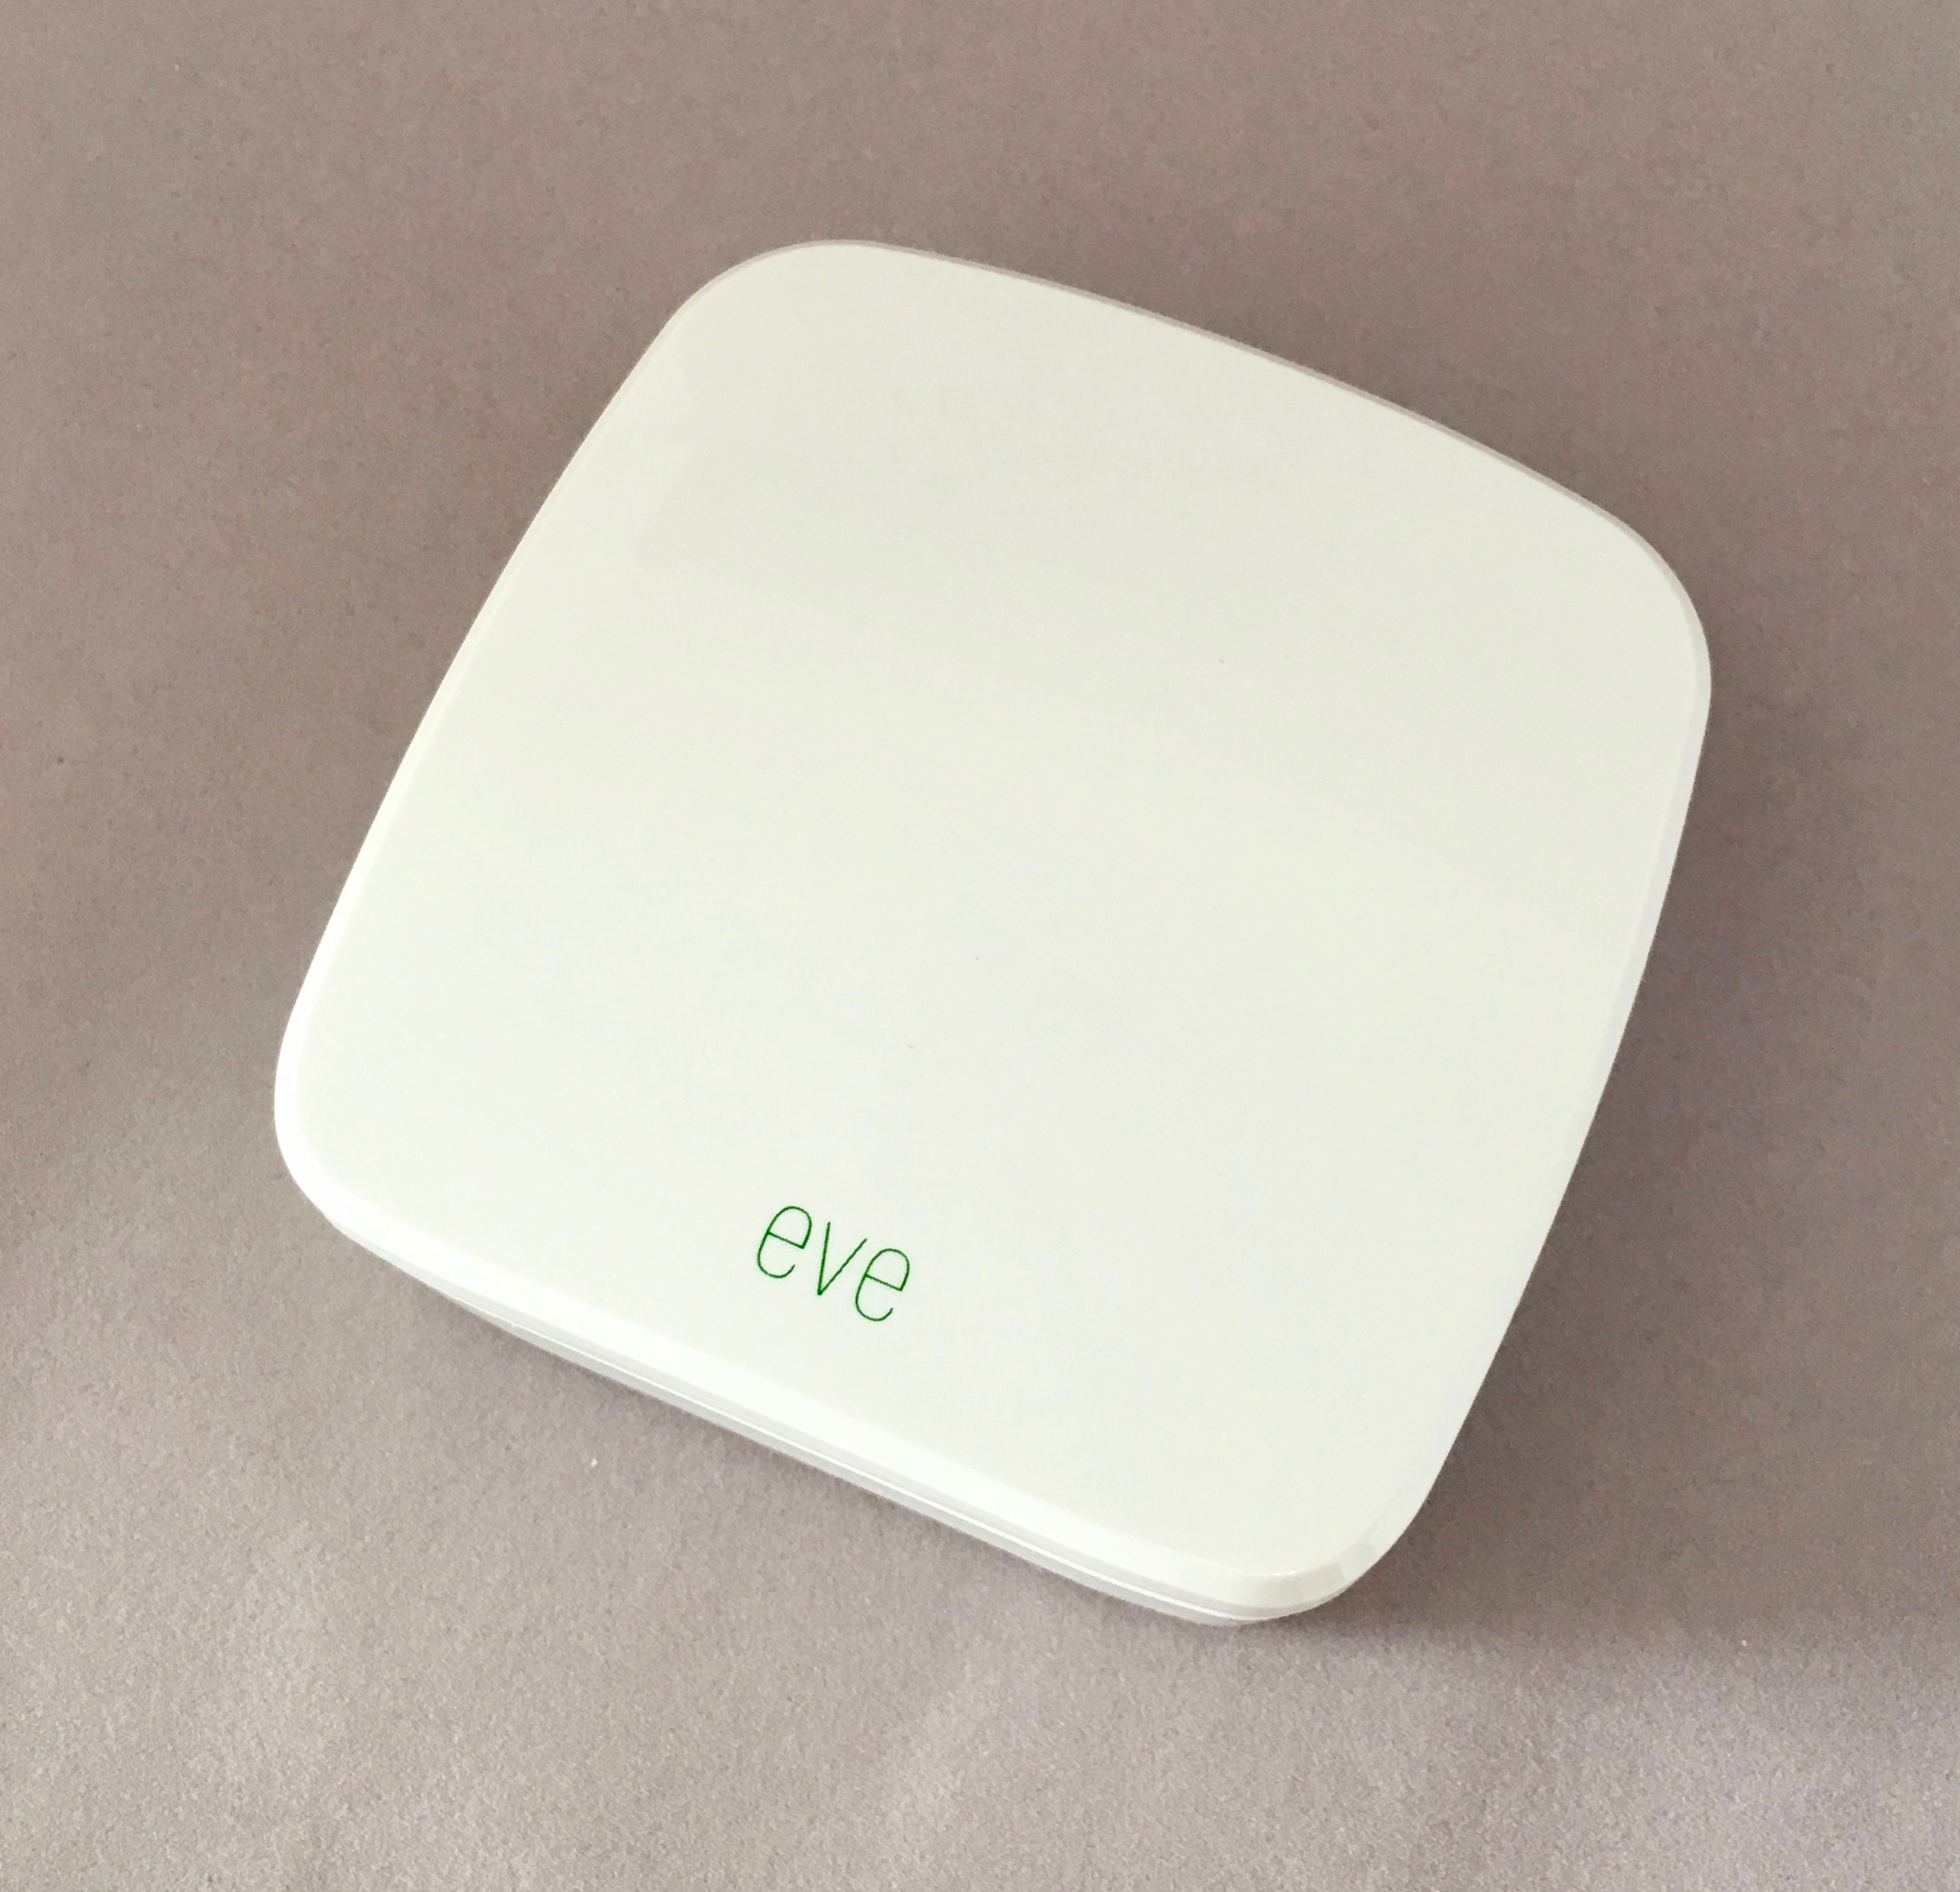 Elgato Eve Monitoring Device